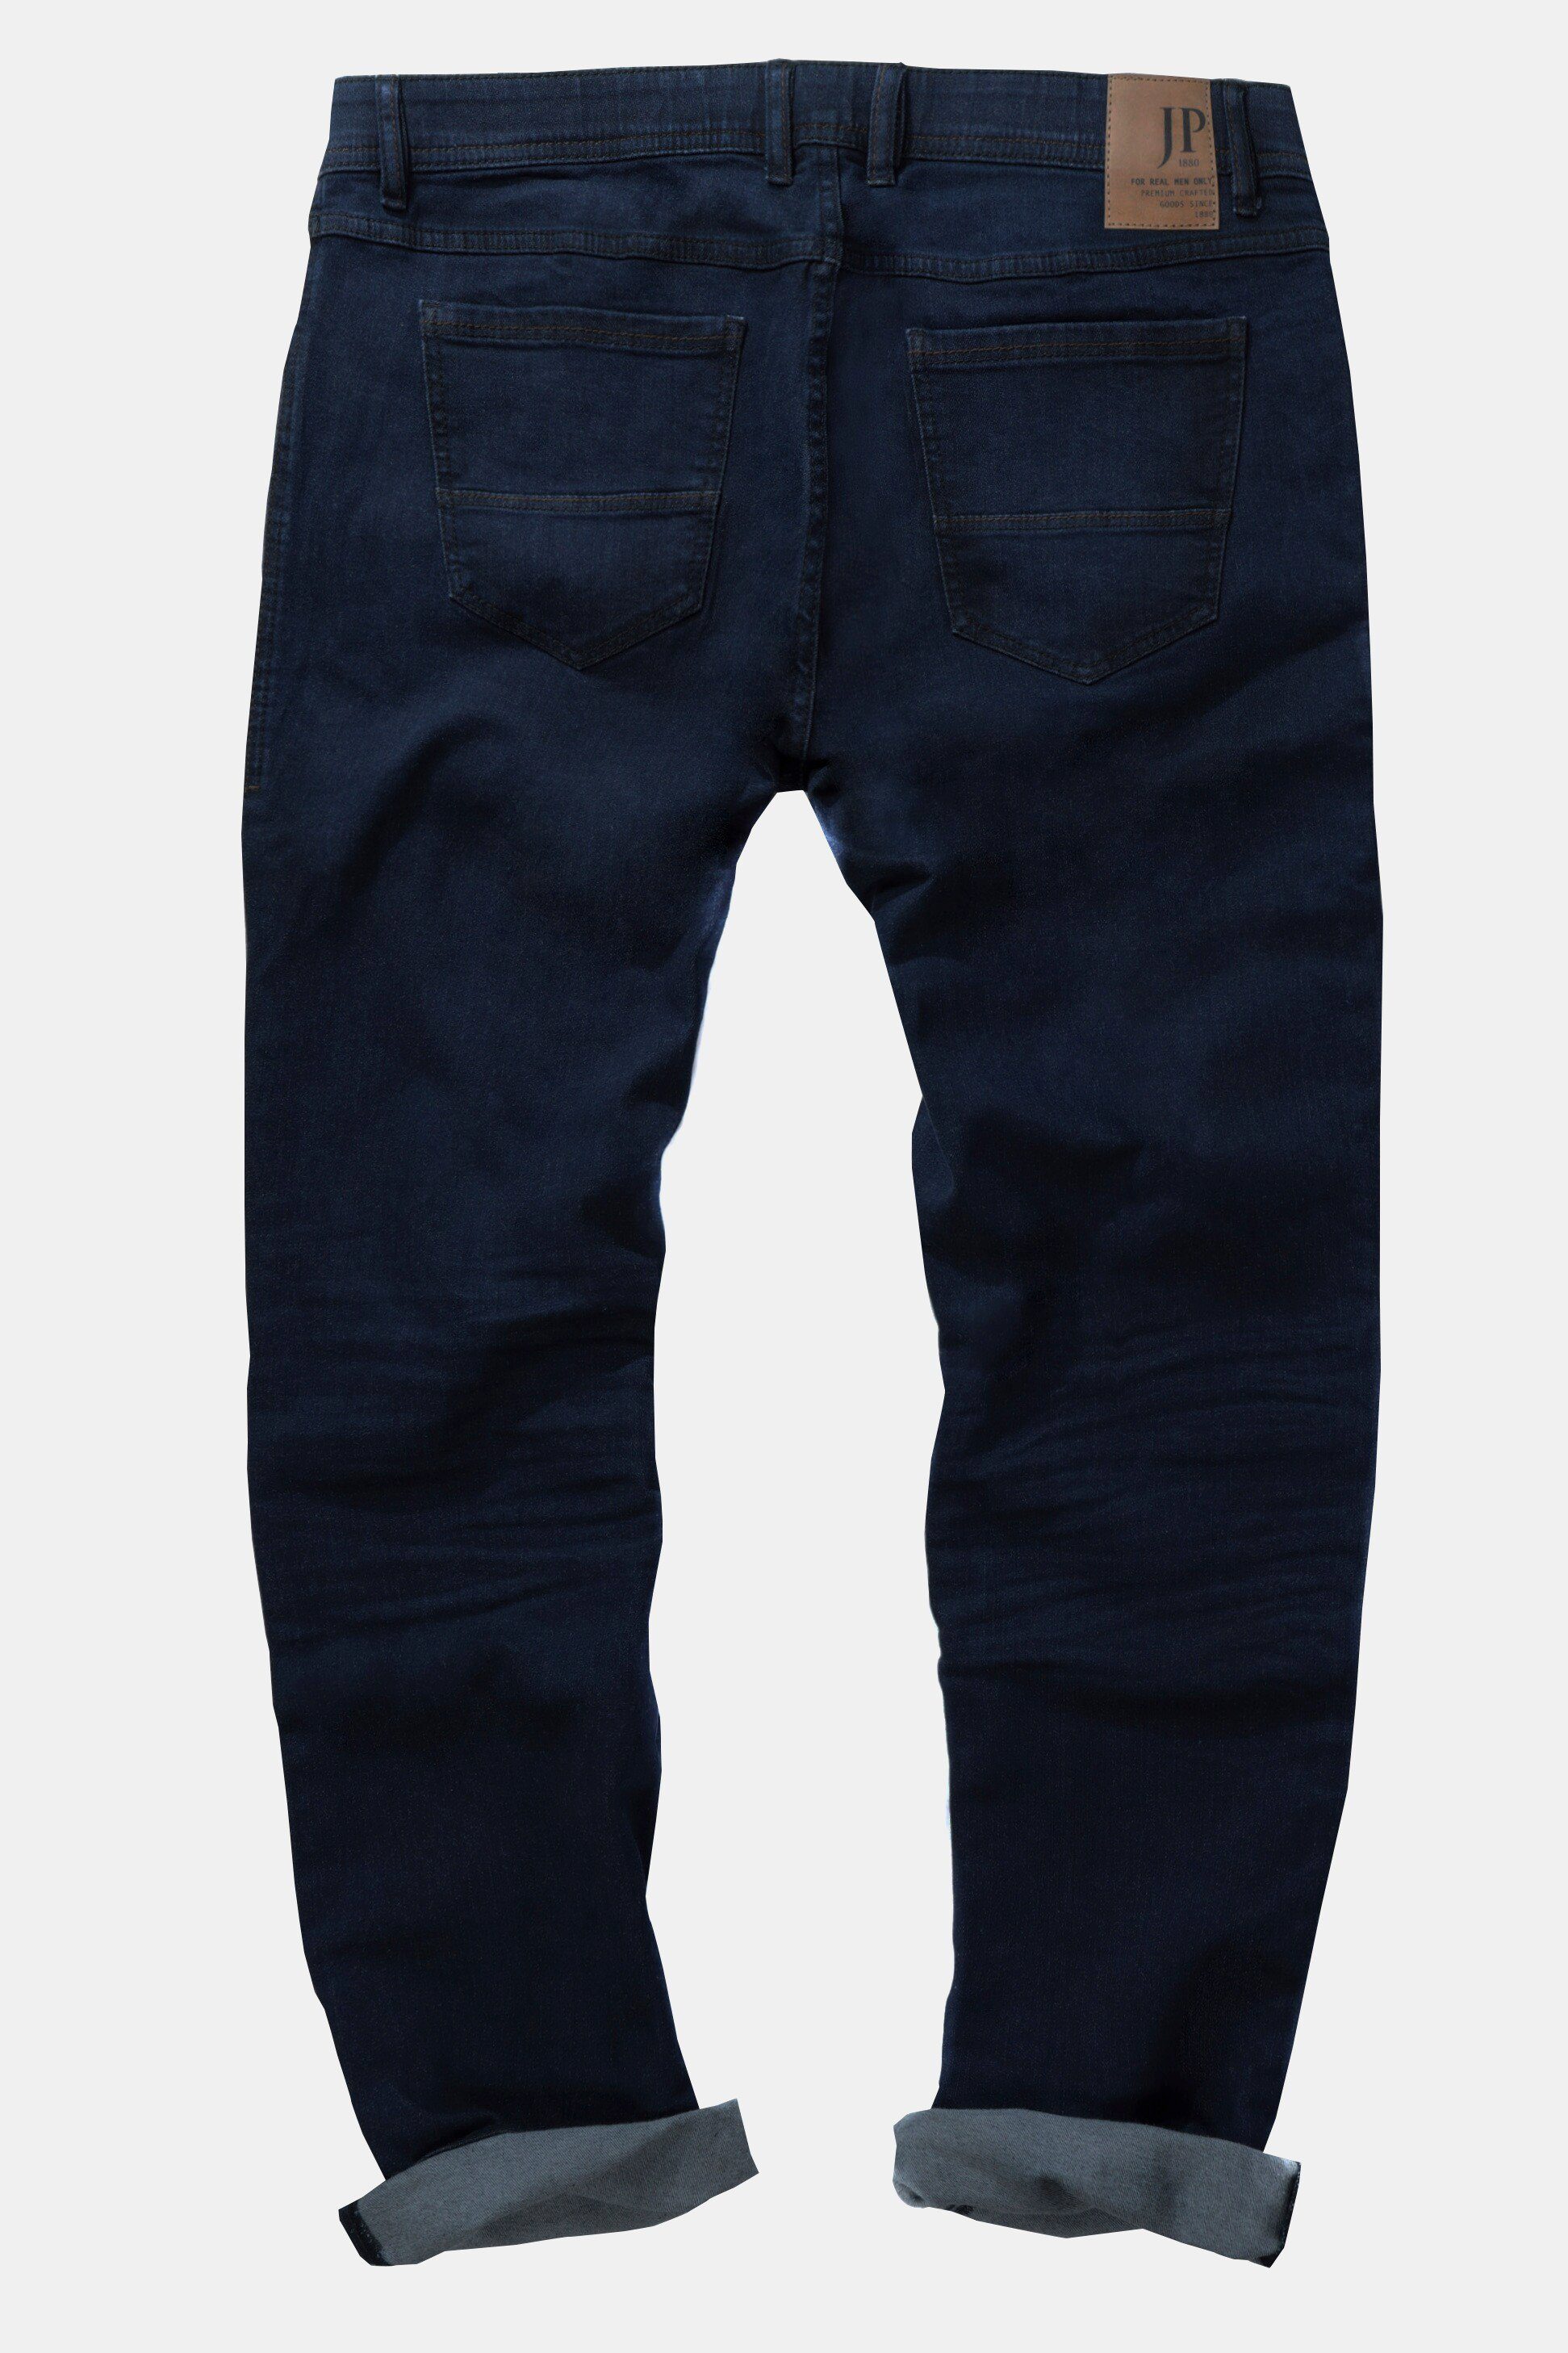 JP1880 Cargohose 70/35 dark Jeans bis Denim Bauchfit blue denim Gr